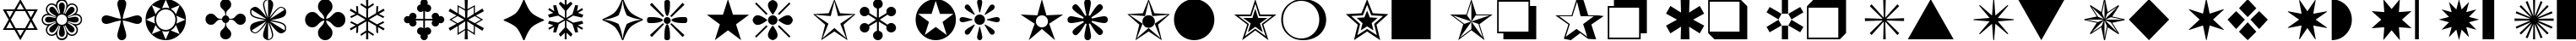 Пример написания английского алфавита шрифтом ITC Zapf Dingbats